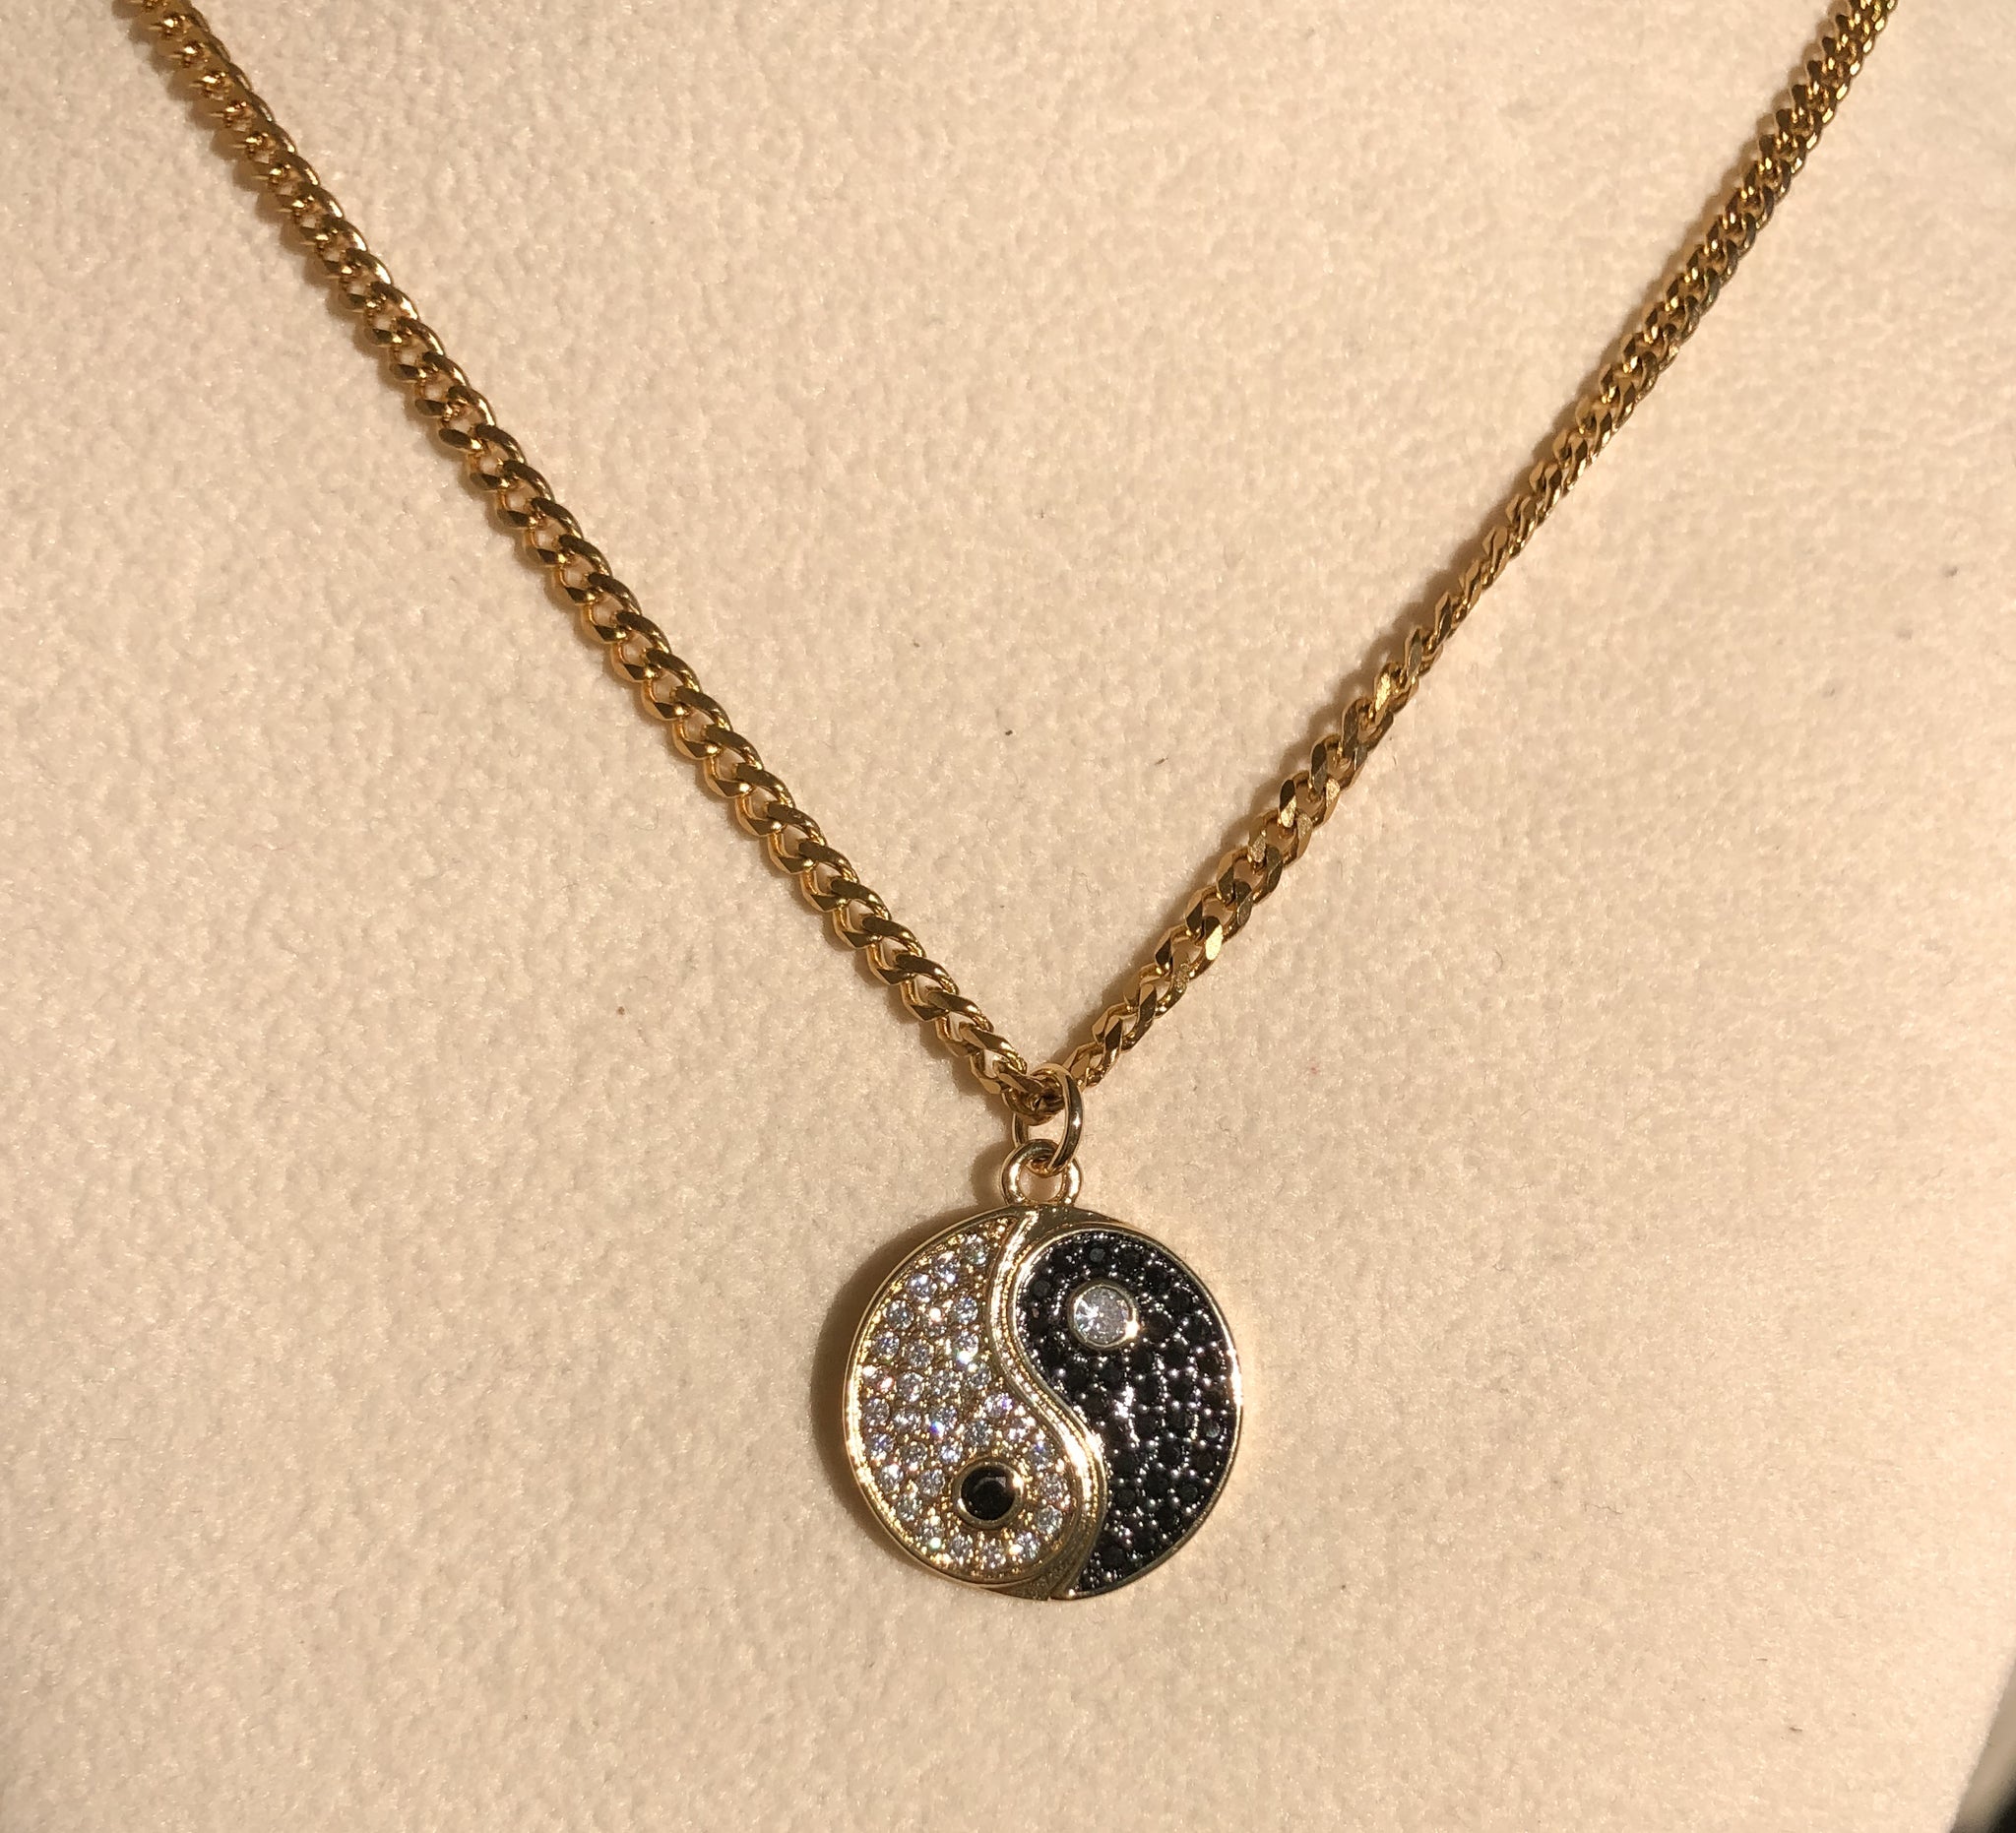 Yin Yang Coin Necklace